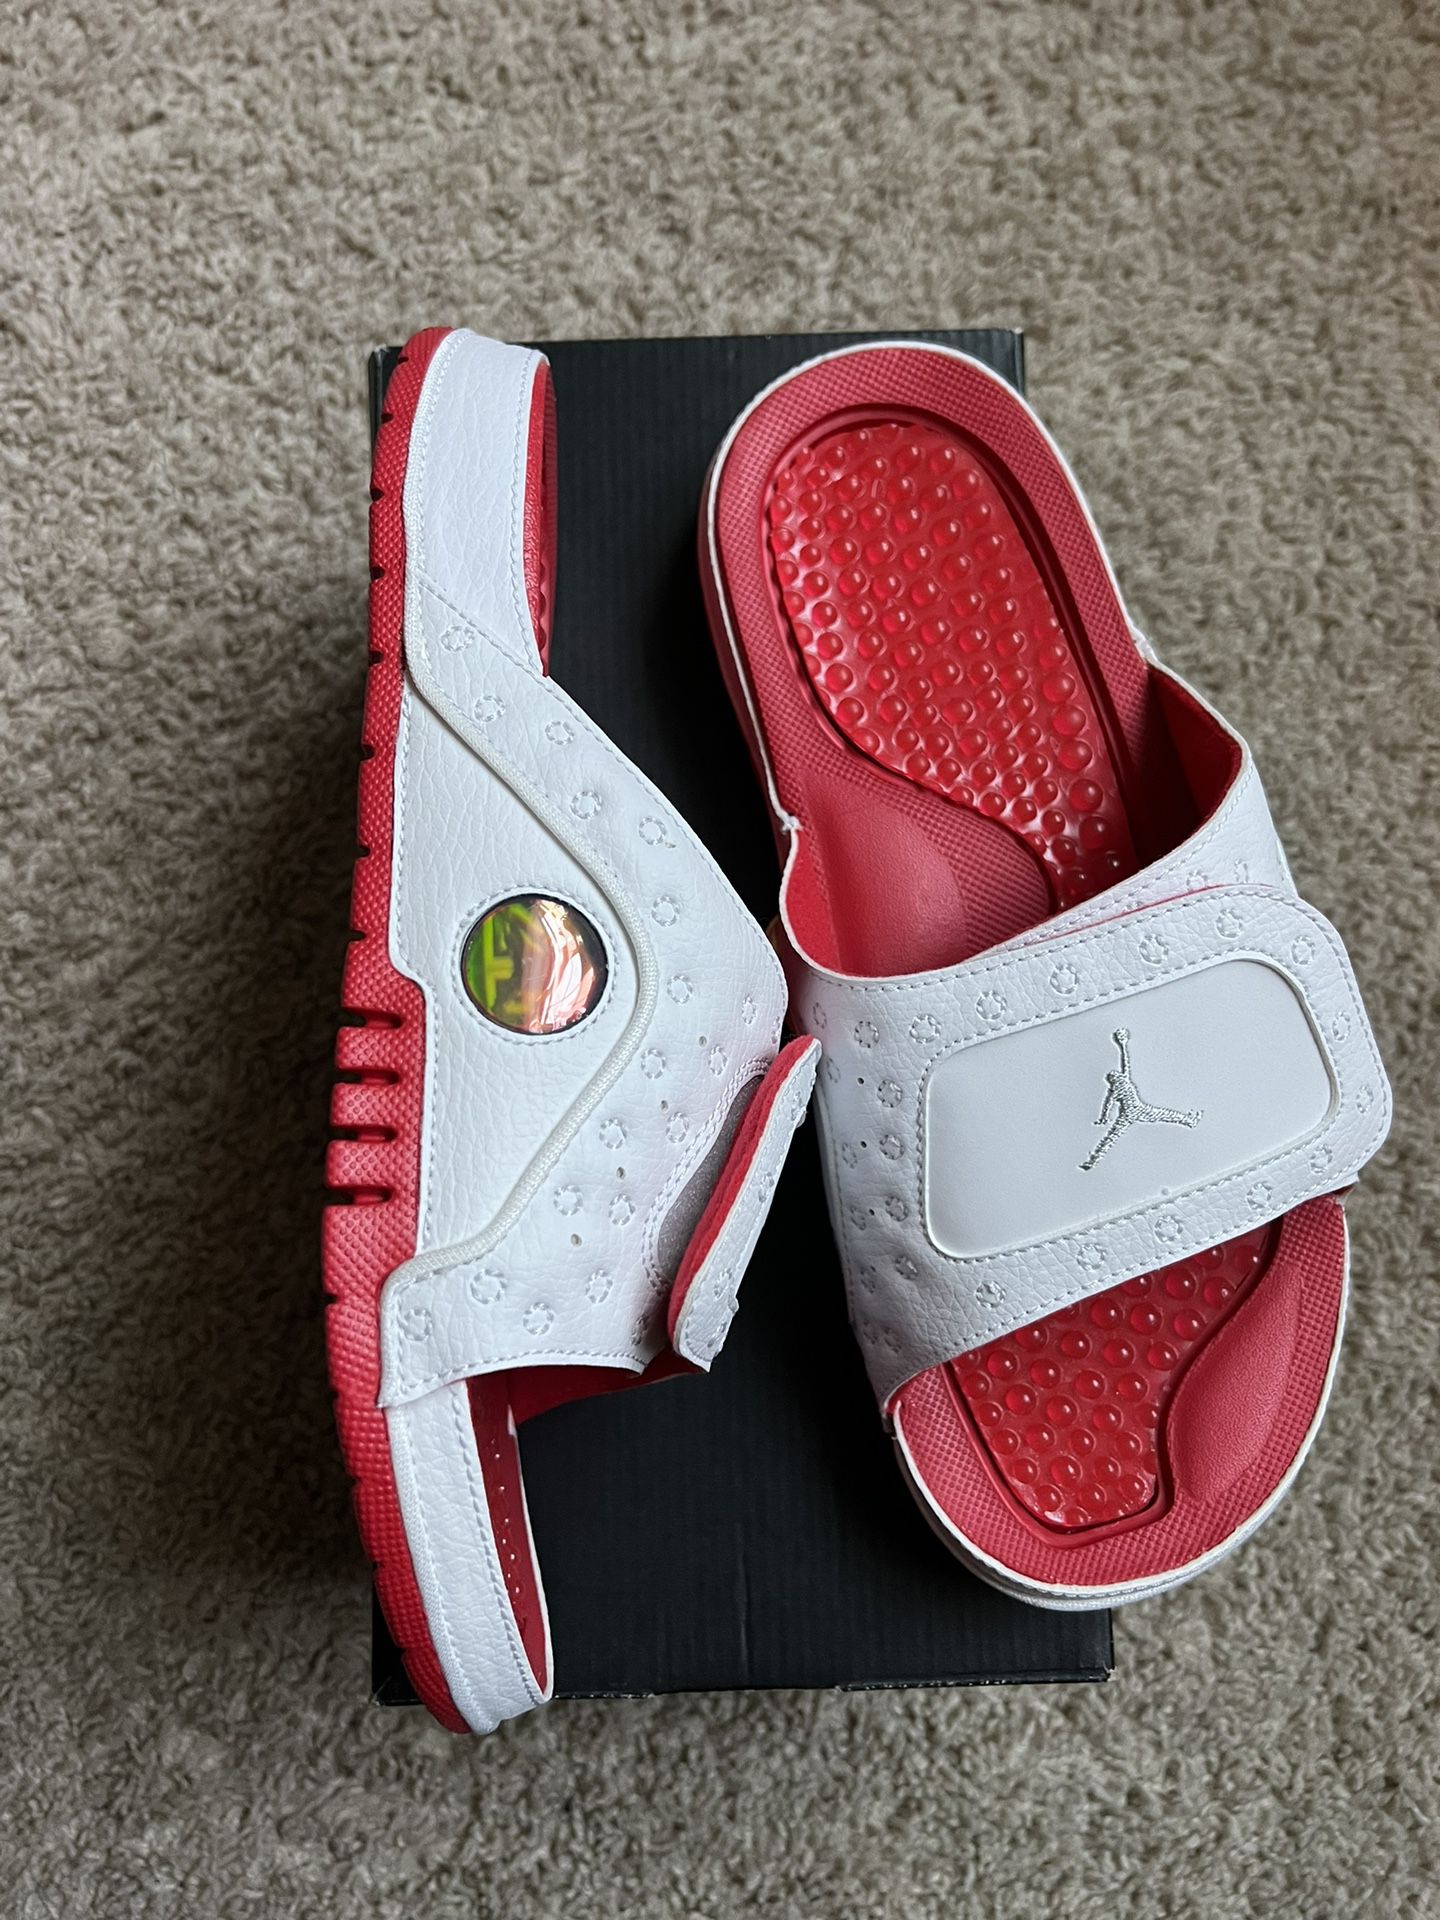 Nike Air Jordan Hydro XIII 13 Retro Men’s 8Slides Sandal Red White 684915-121